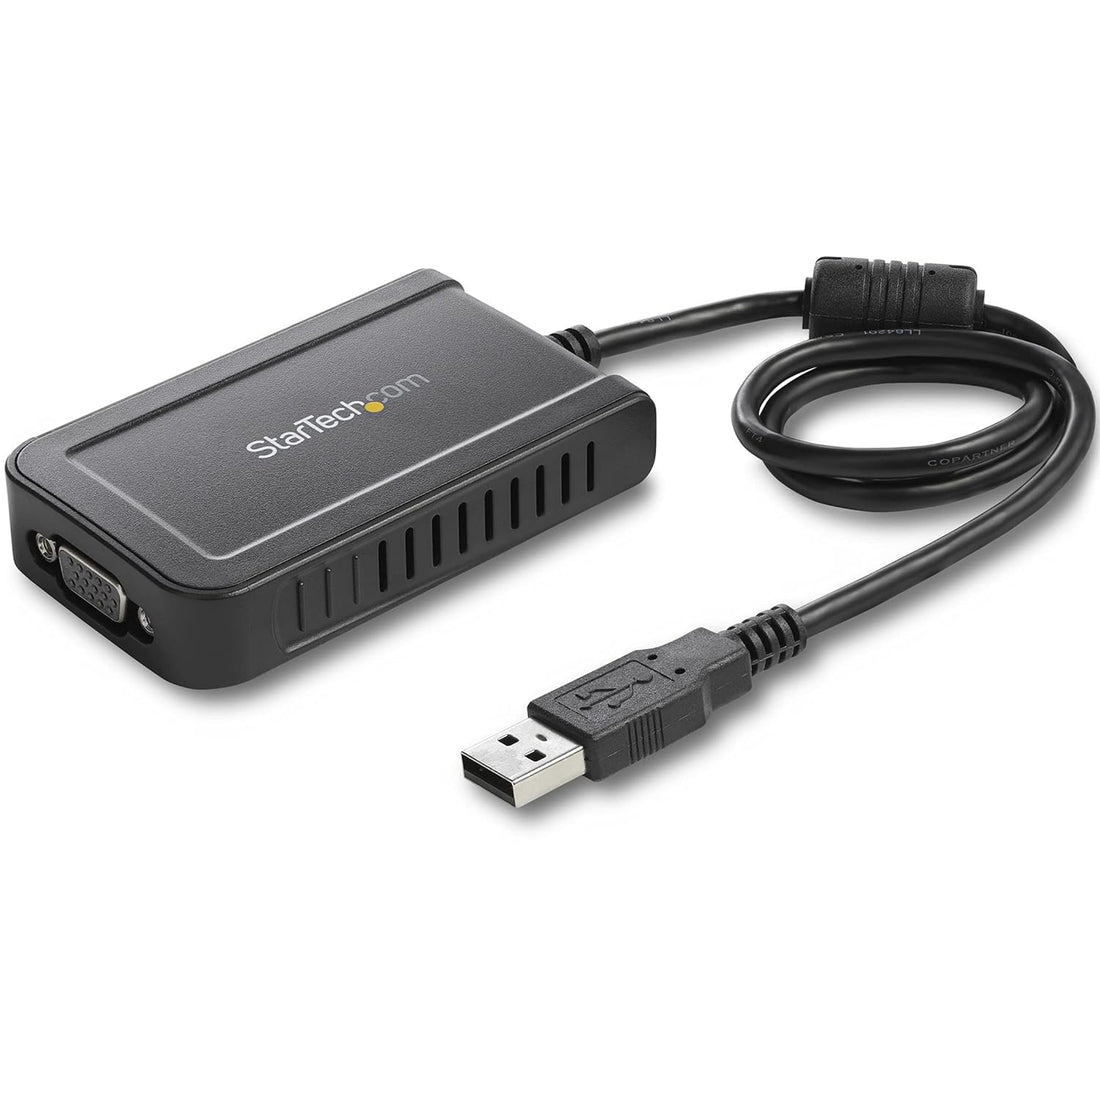 StarTech.com USB to VGA Adapter - 1920x1200 - External Video & Graphics Card - Dual Monitor Display Adapter - Supports Windows (USB2VGAE3), Gray